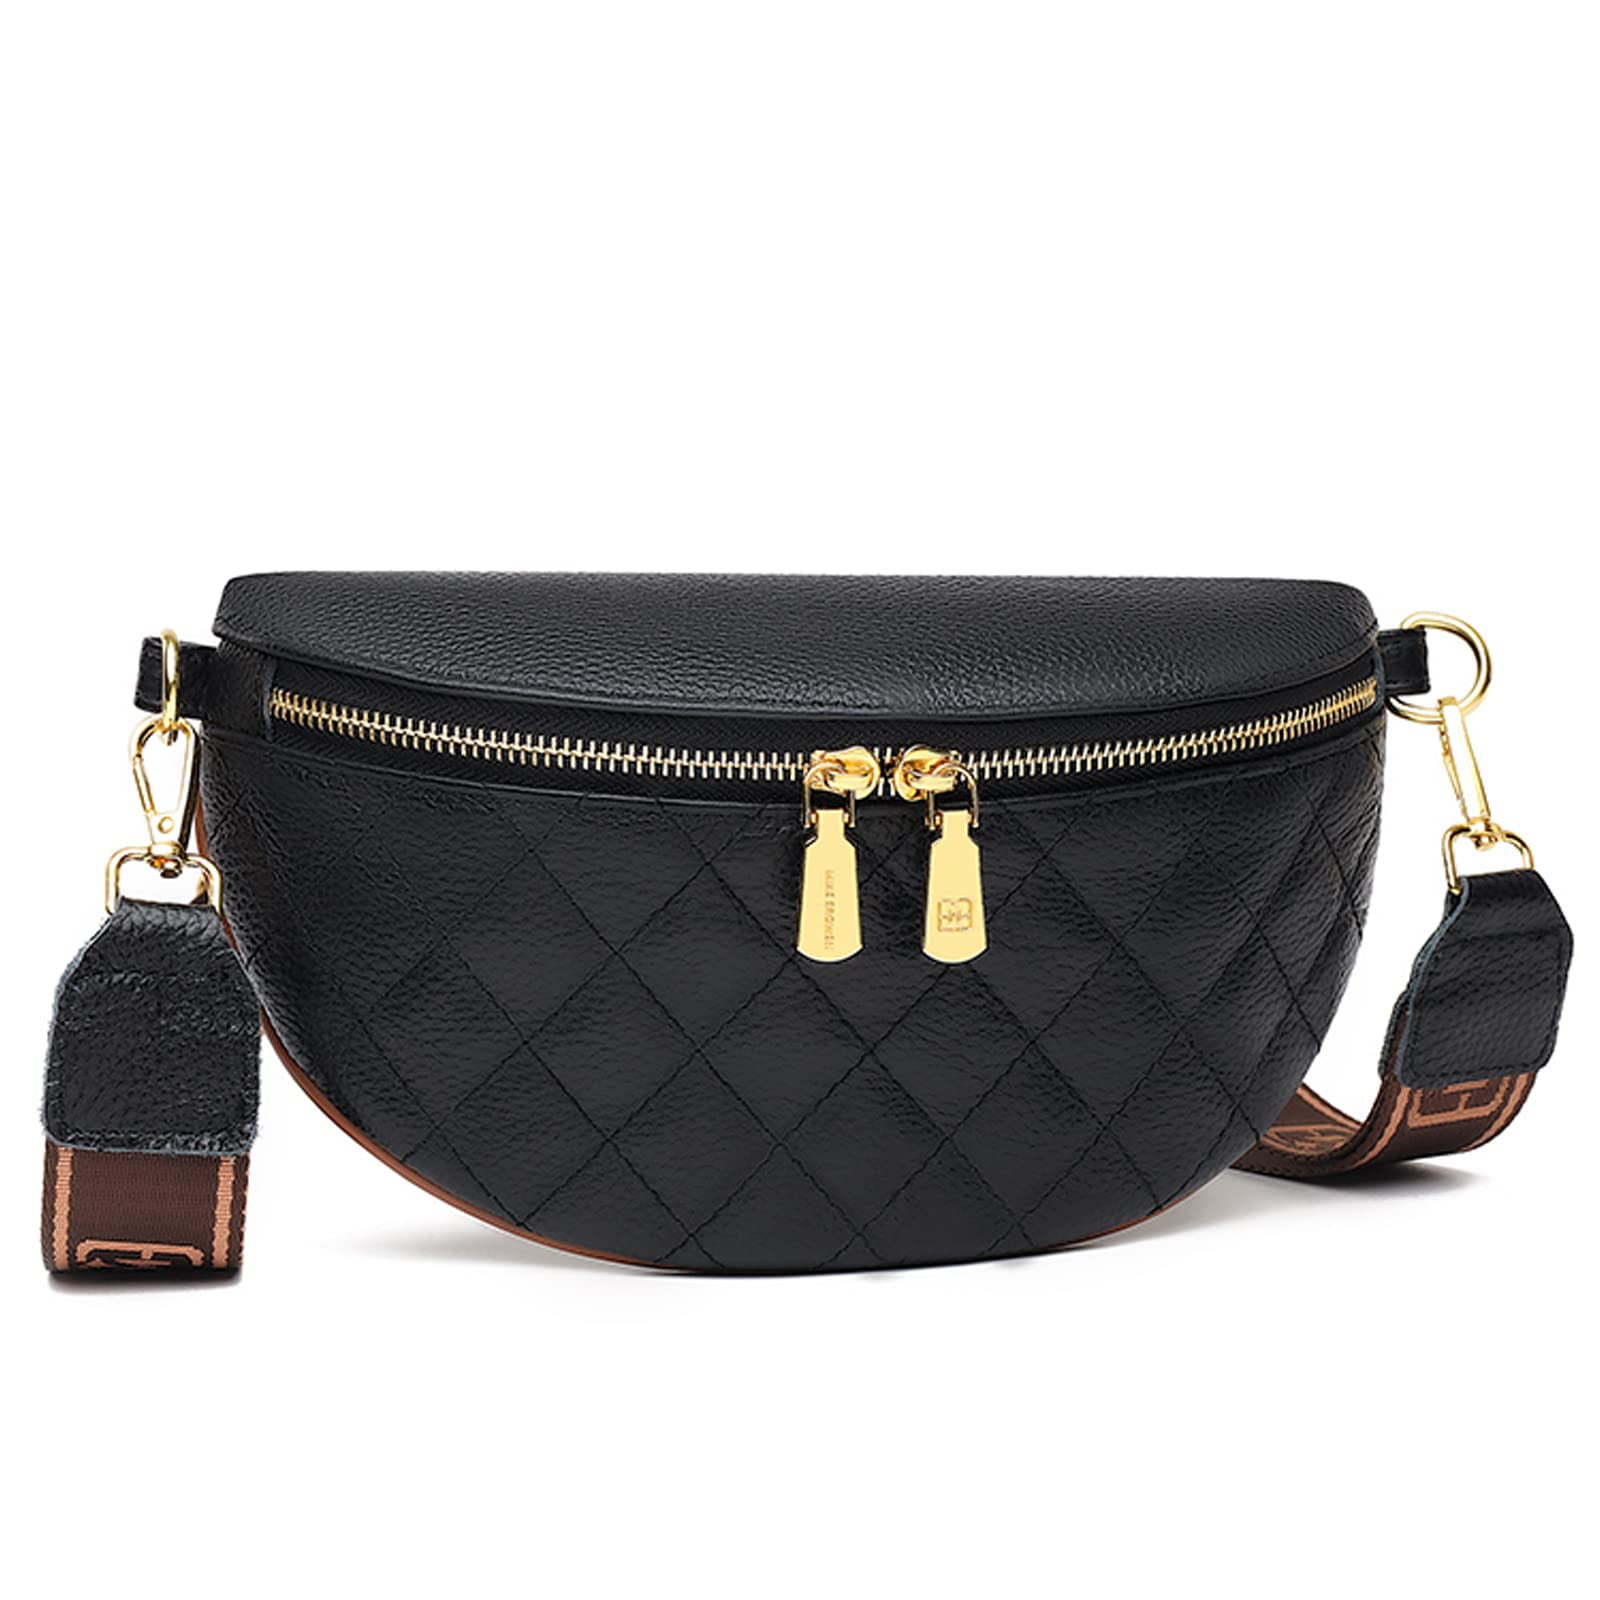 Eslcorri Crossbody Bags for Women - Fashion Sling